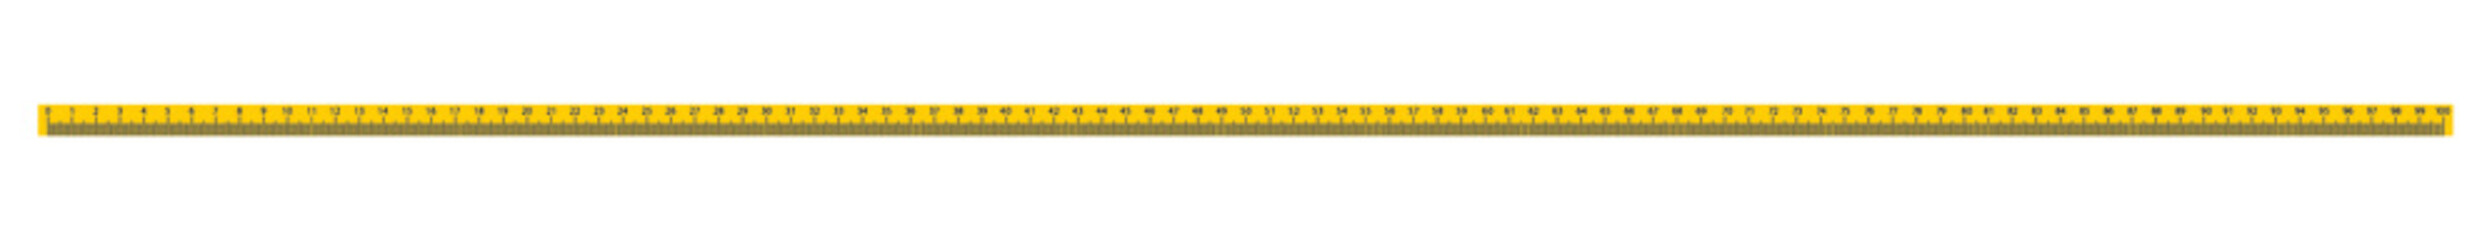 Measure Tape ruler metric measurement. 100 centimeters metric vector ruler with yellow and black color. School equipment